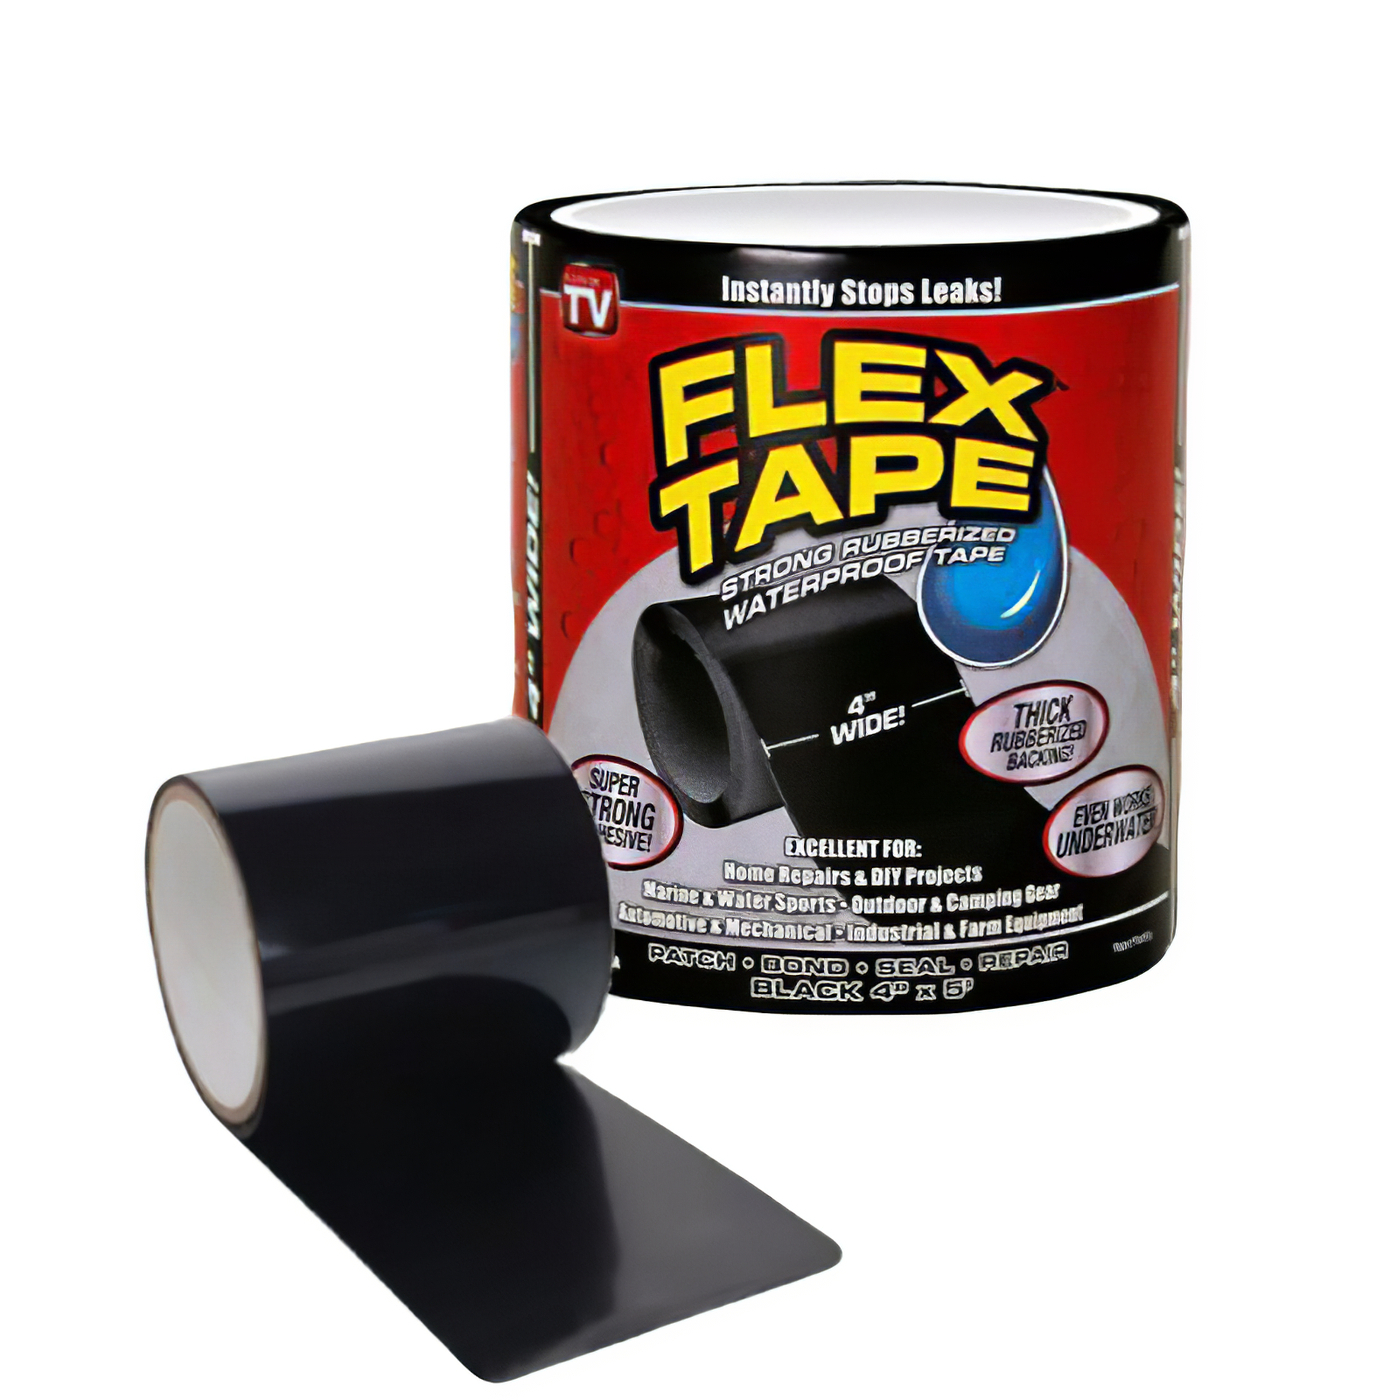 Flex tape